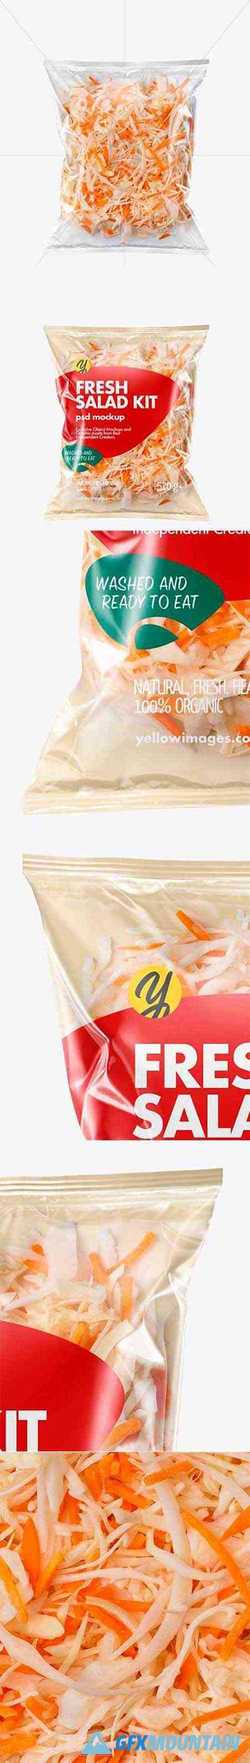 Plastic Bag With Coleslaw Kit Mockup